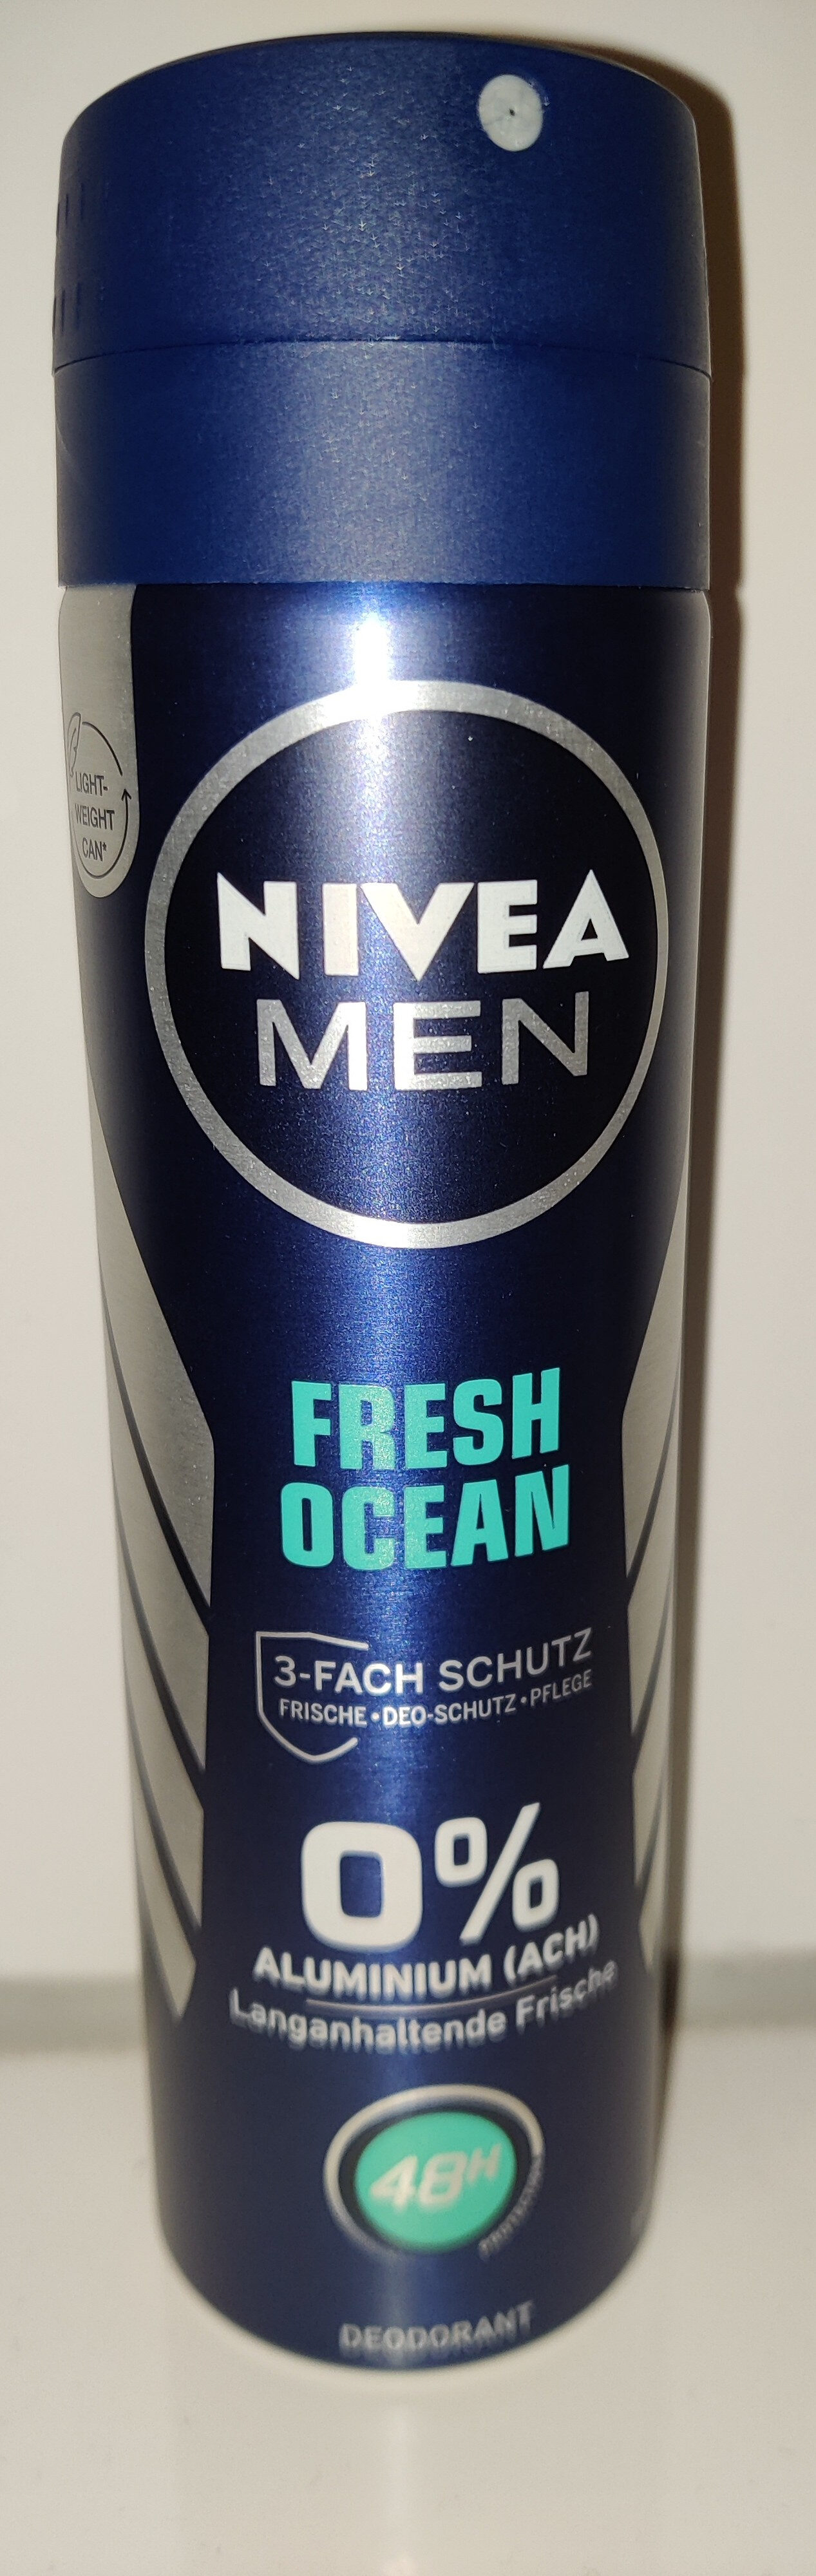 Deodorant Fresh Ocean 3-fach Schutz - Product - de